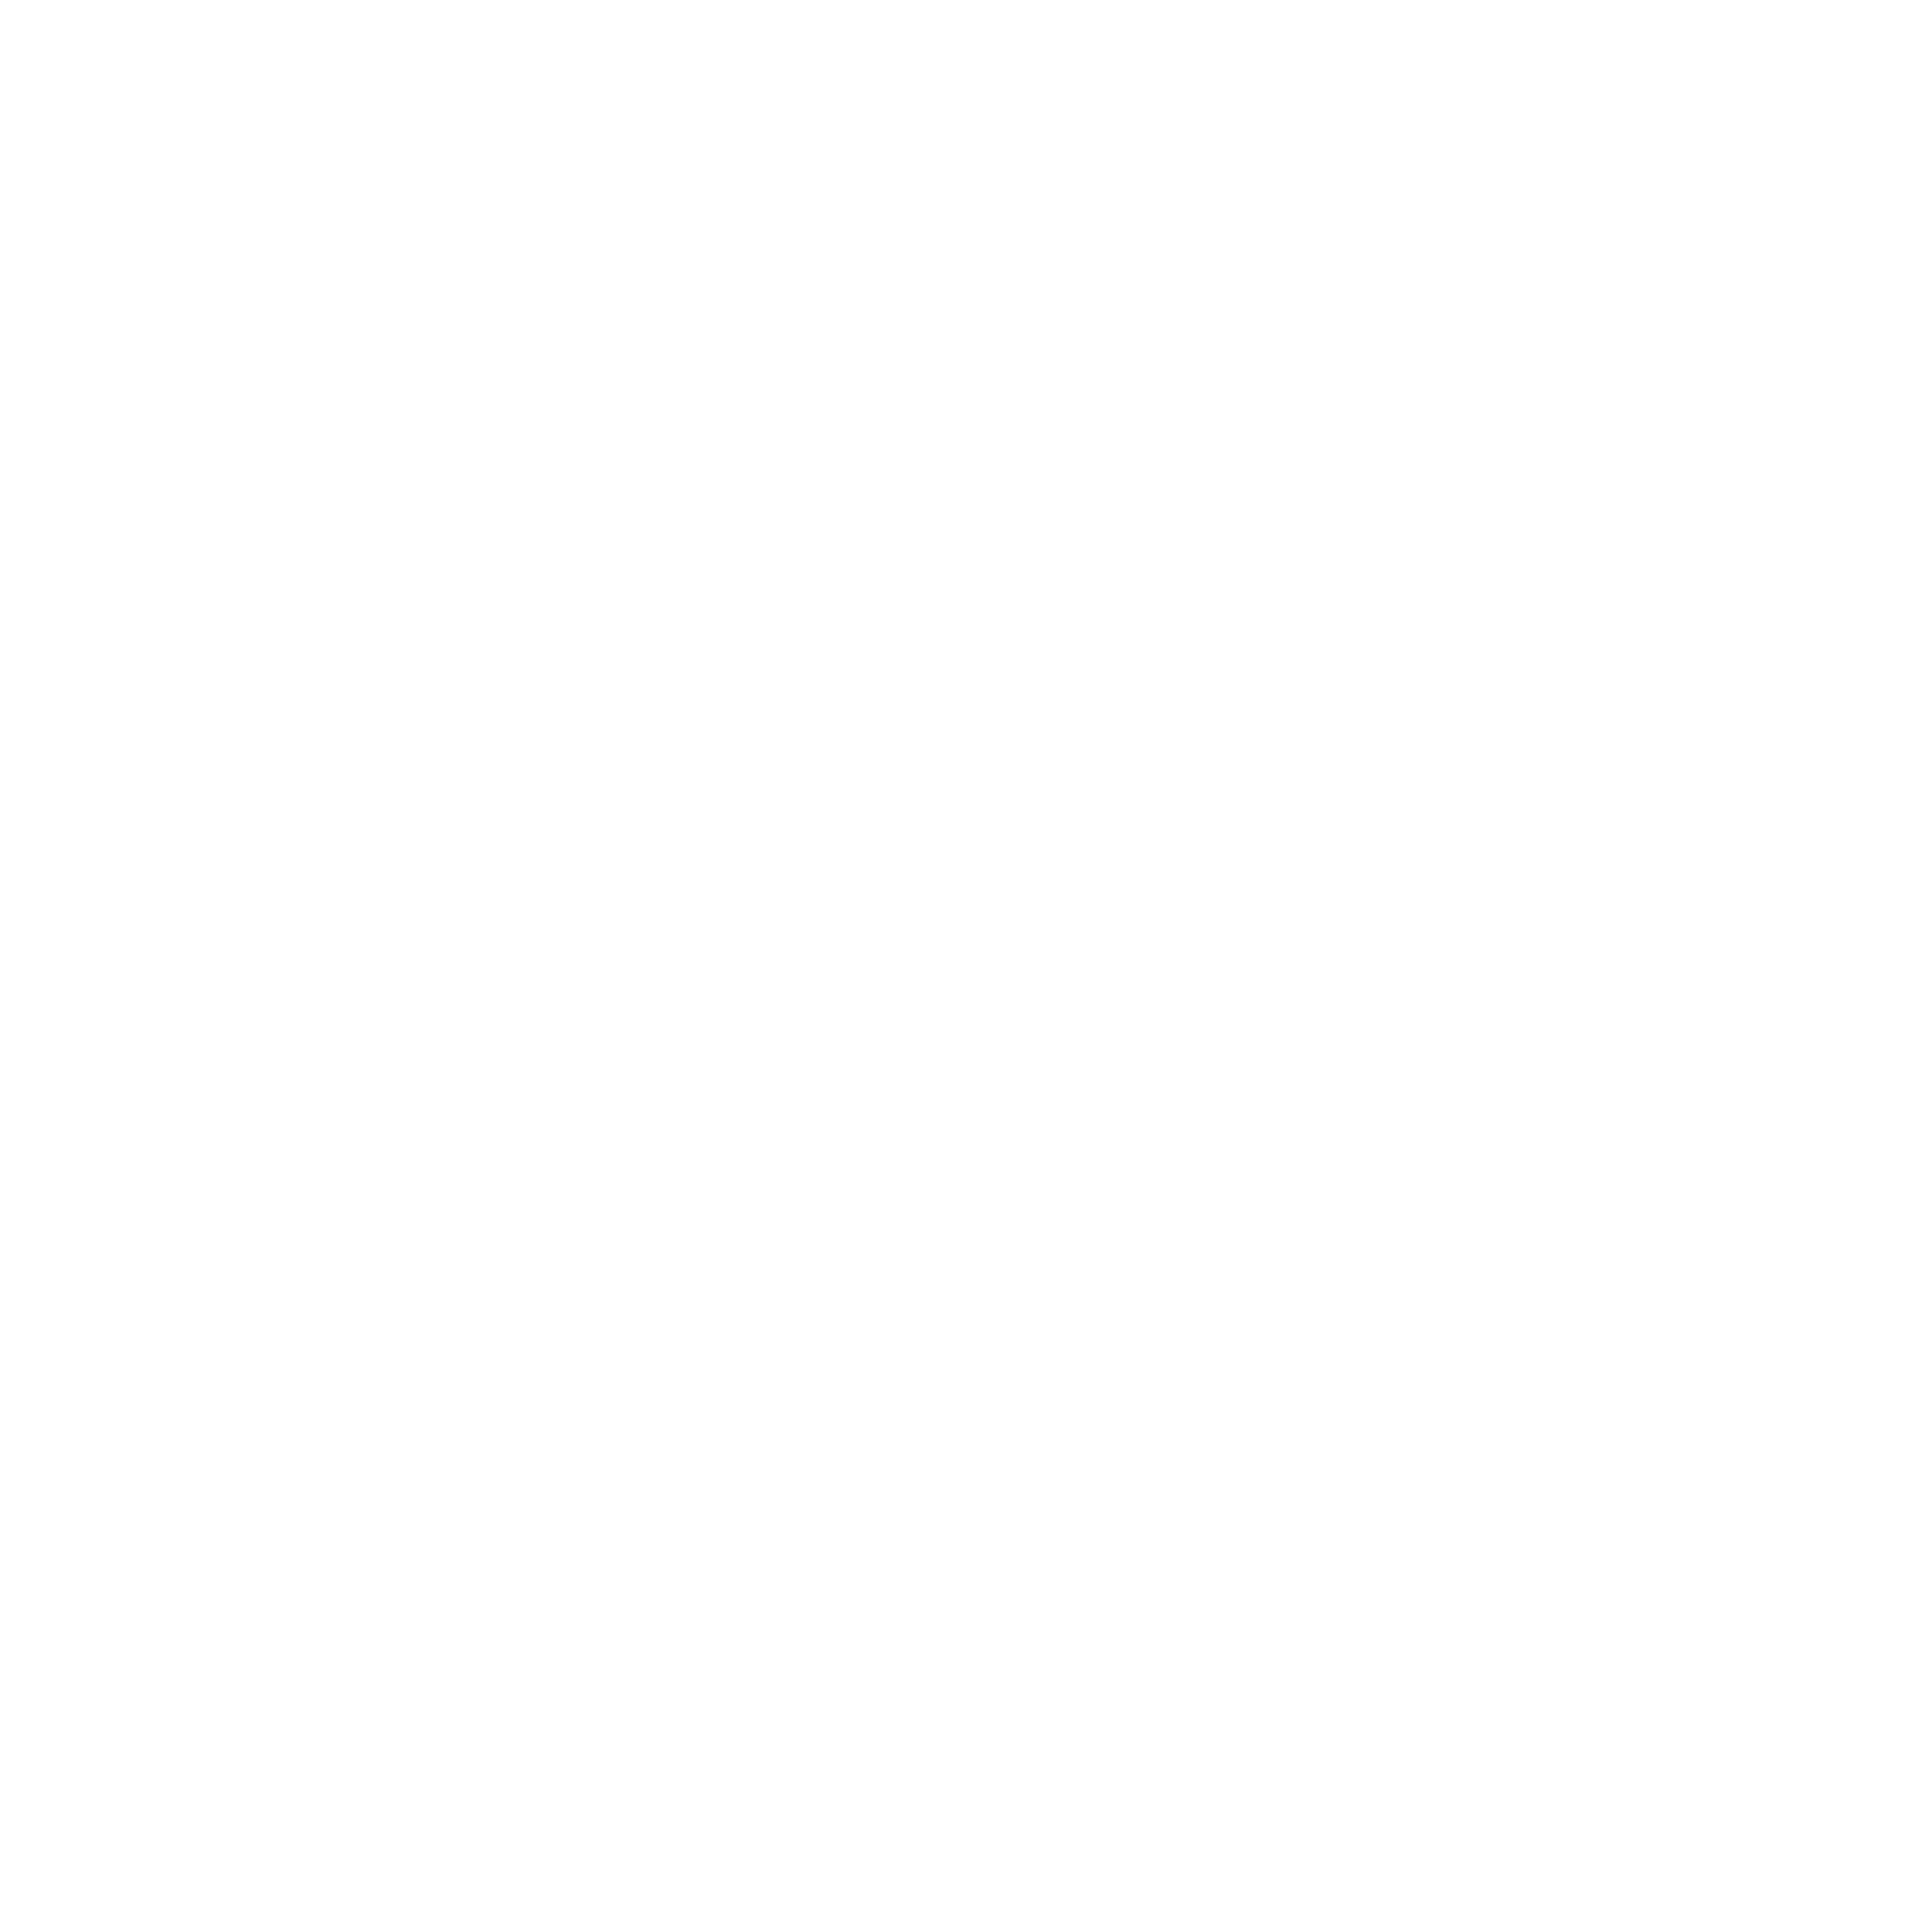 RELIGHT creative